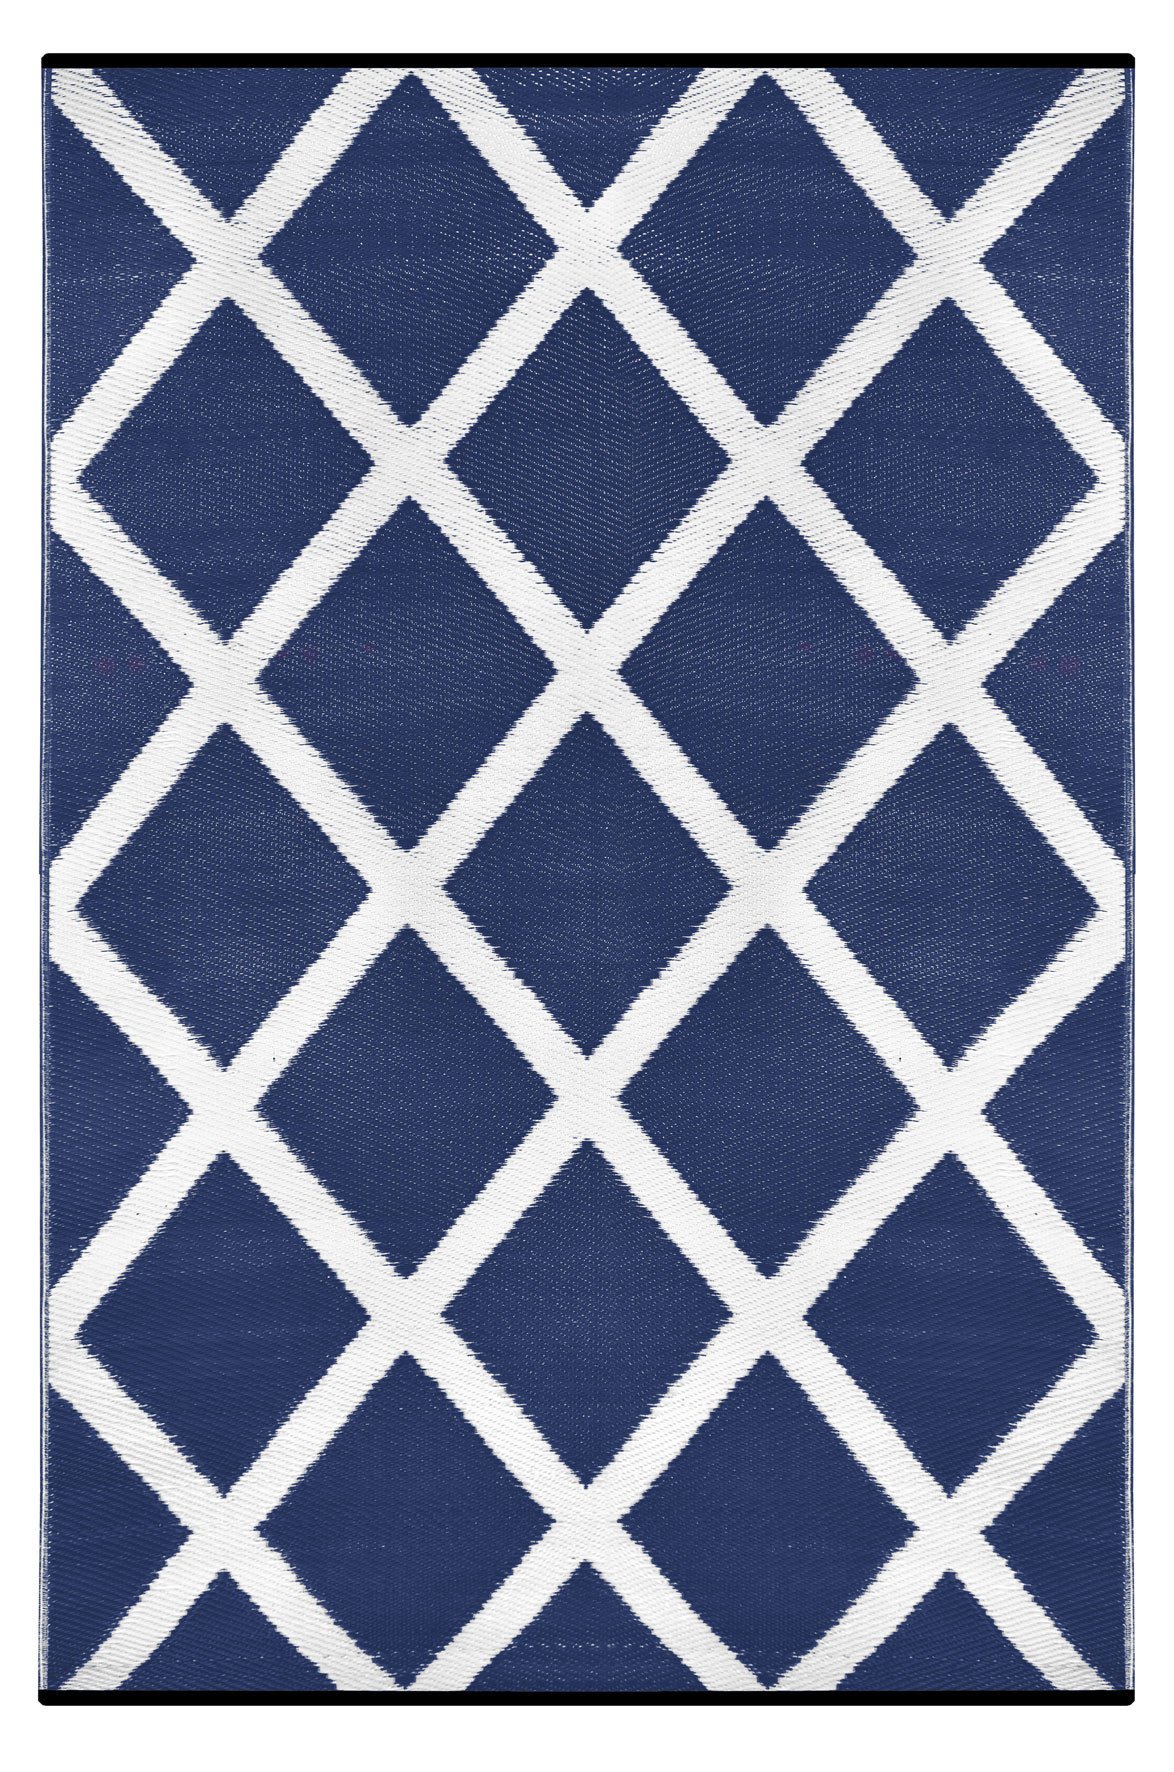 blue rug diamond navy blue and white rug - greendecore.co.uk - 1 ... HVKYDAO